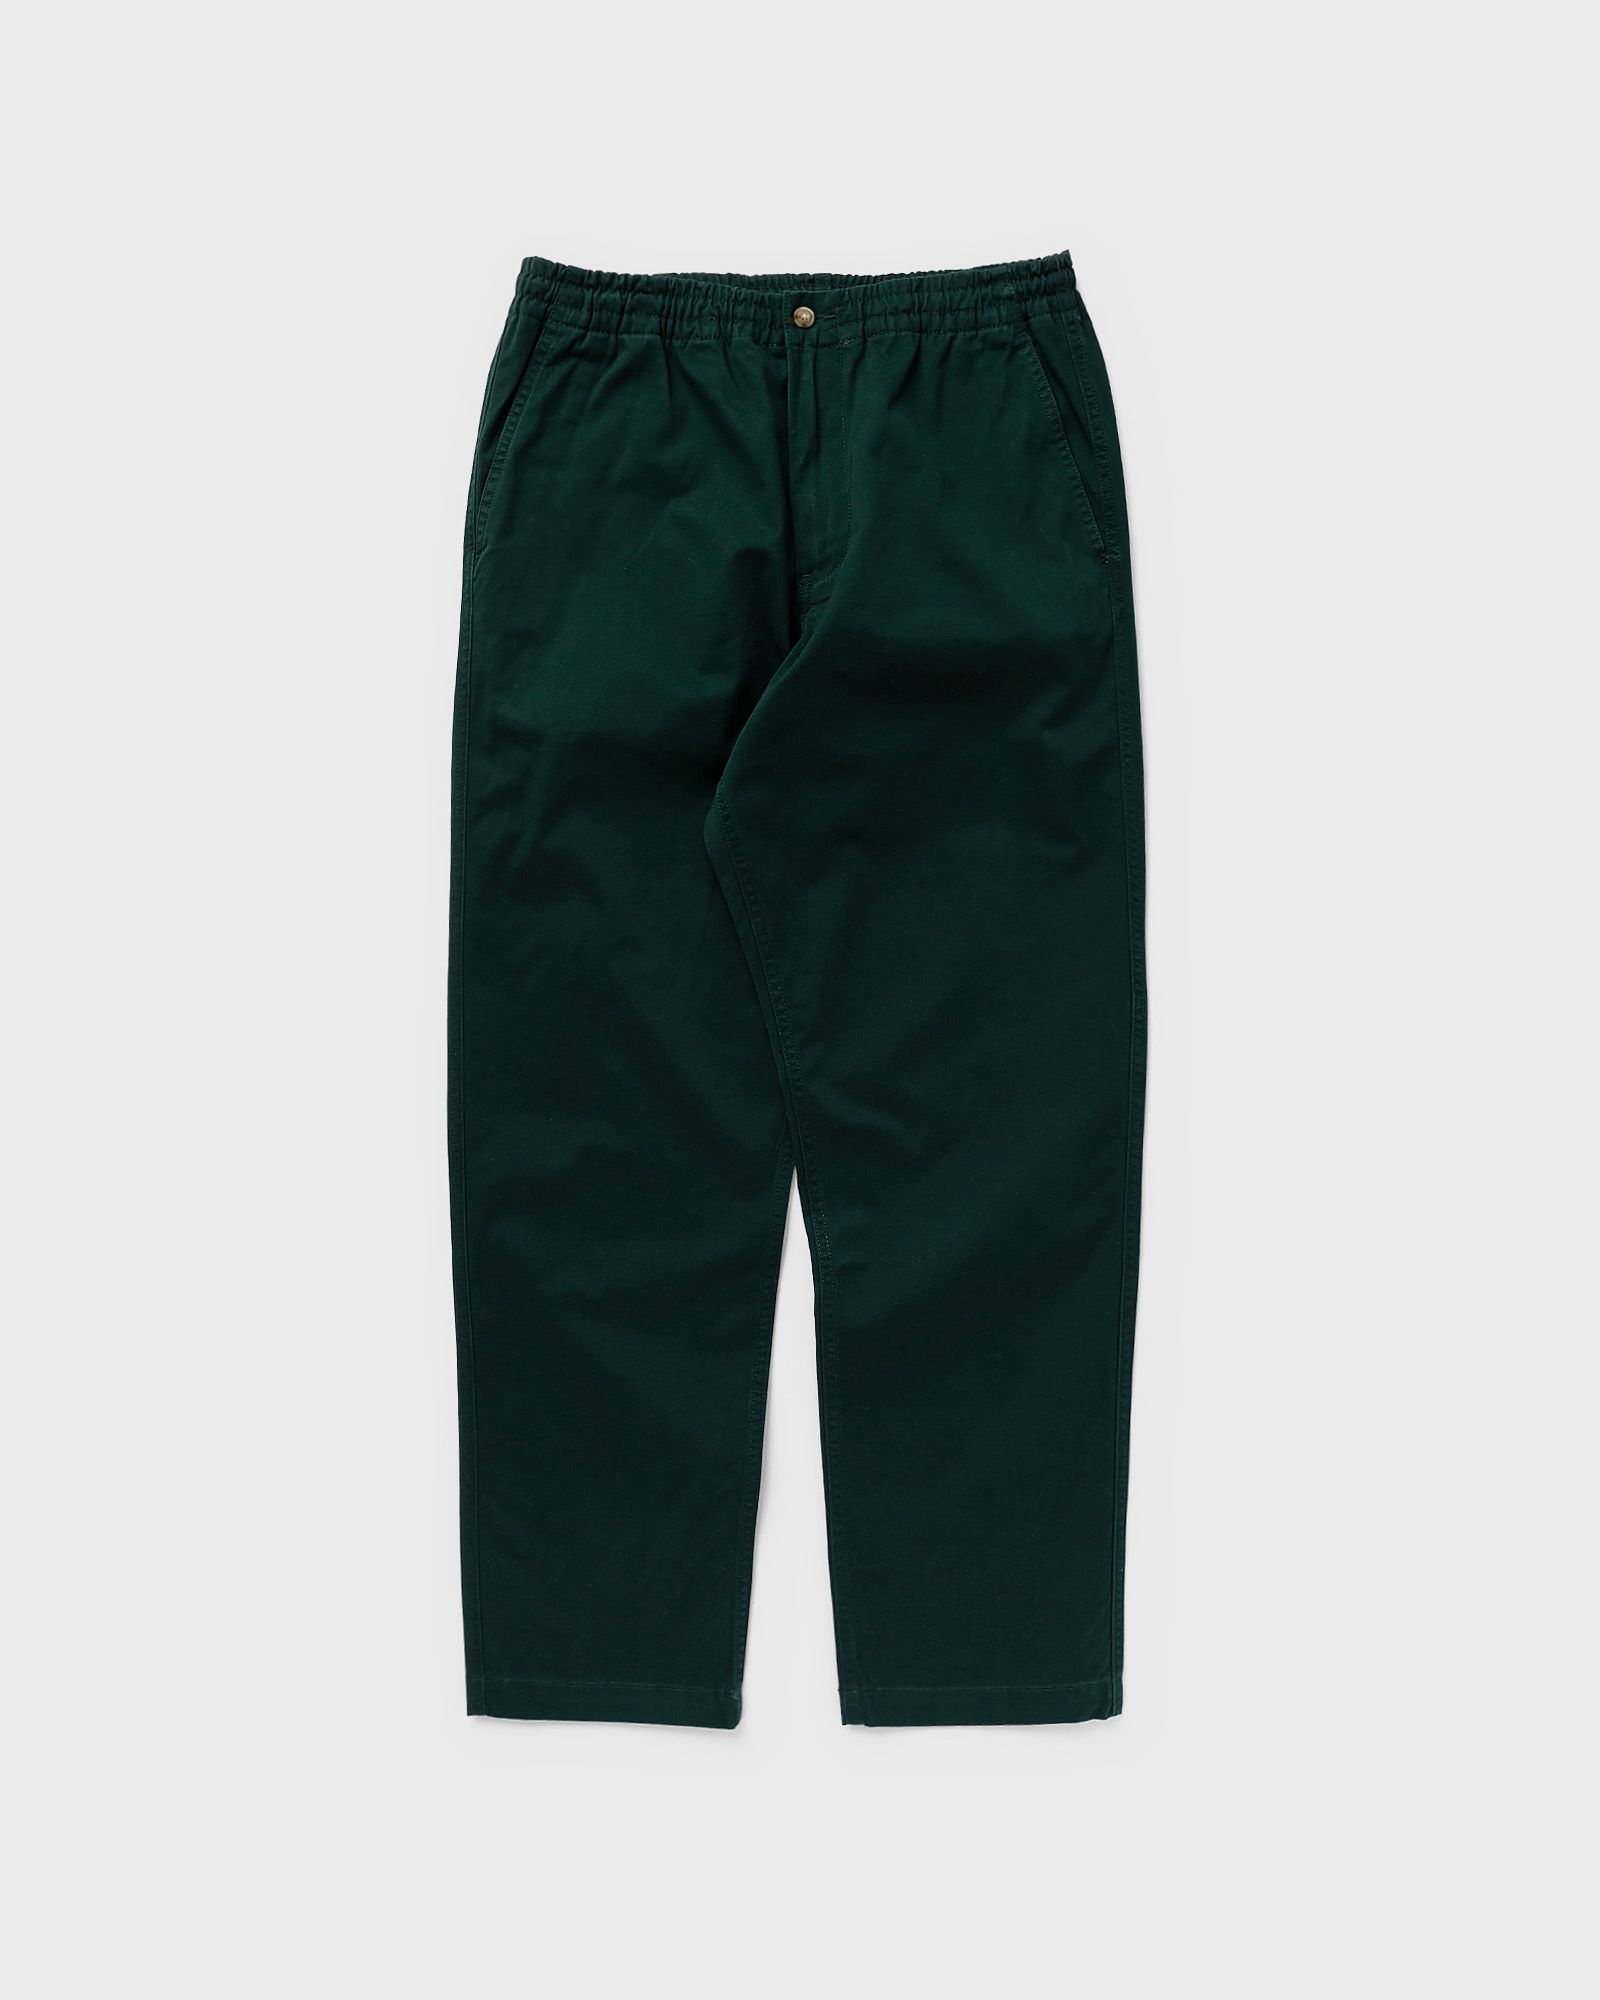 Polo Ralph Lauren - cfprepsterp-flat-pant men casual pants green in größe:l